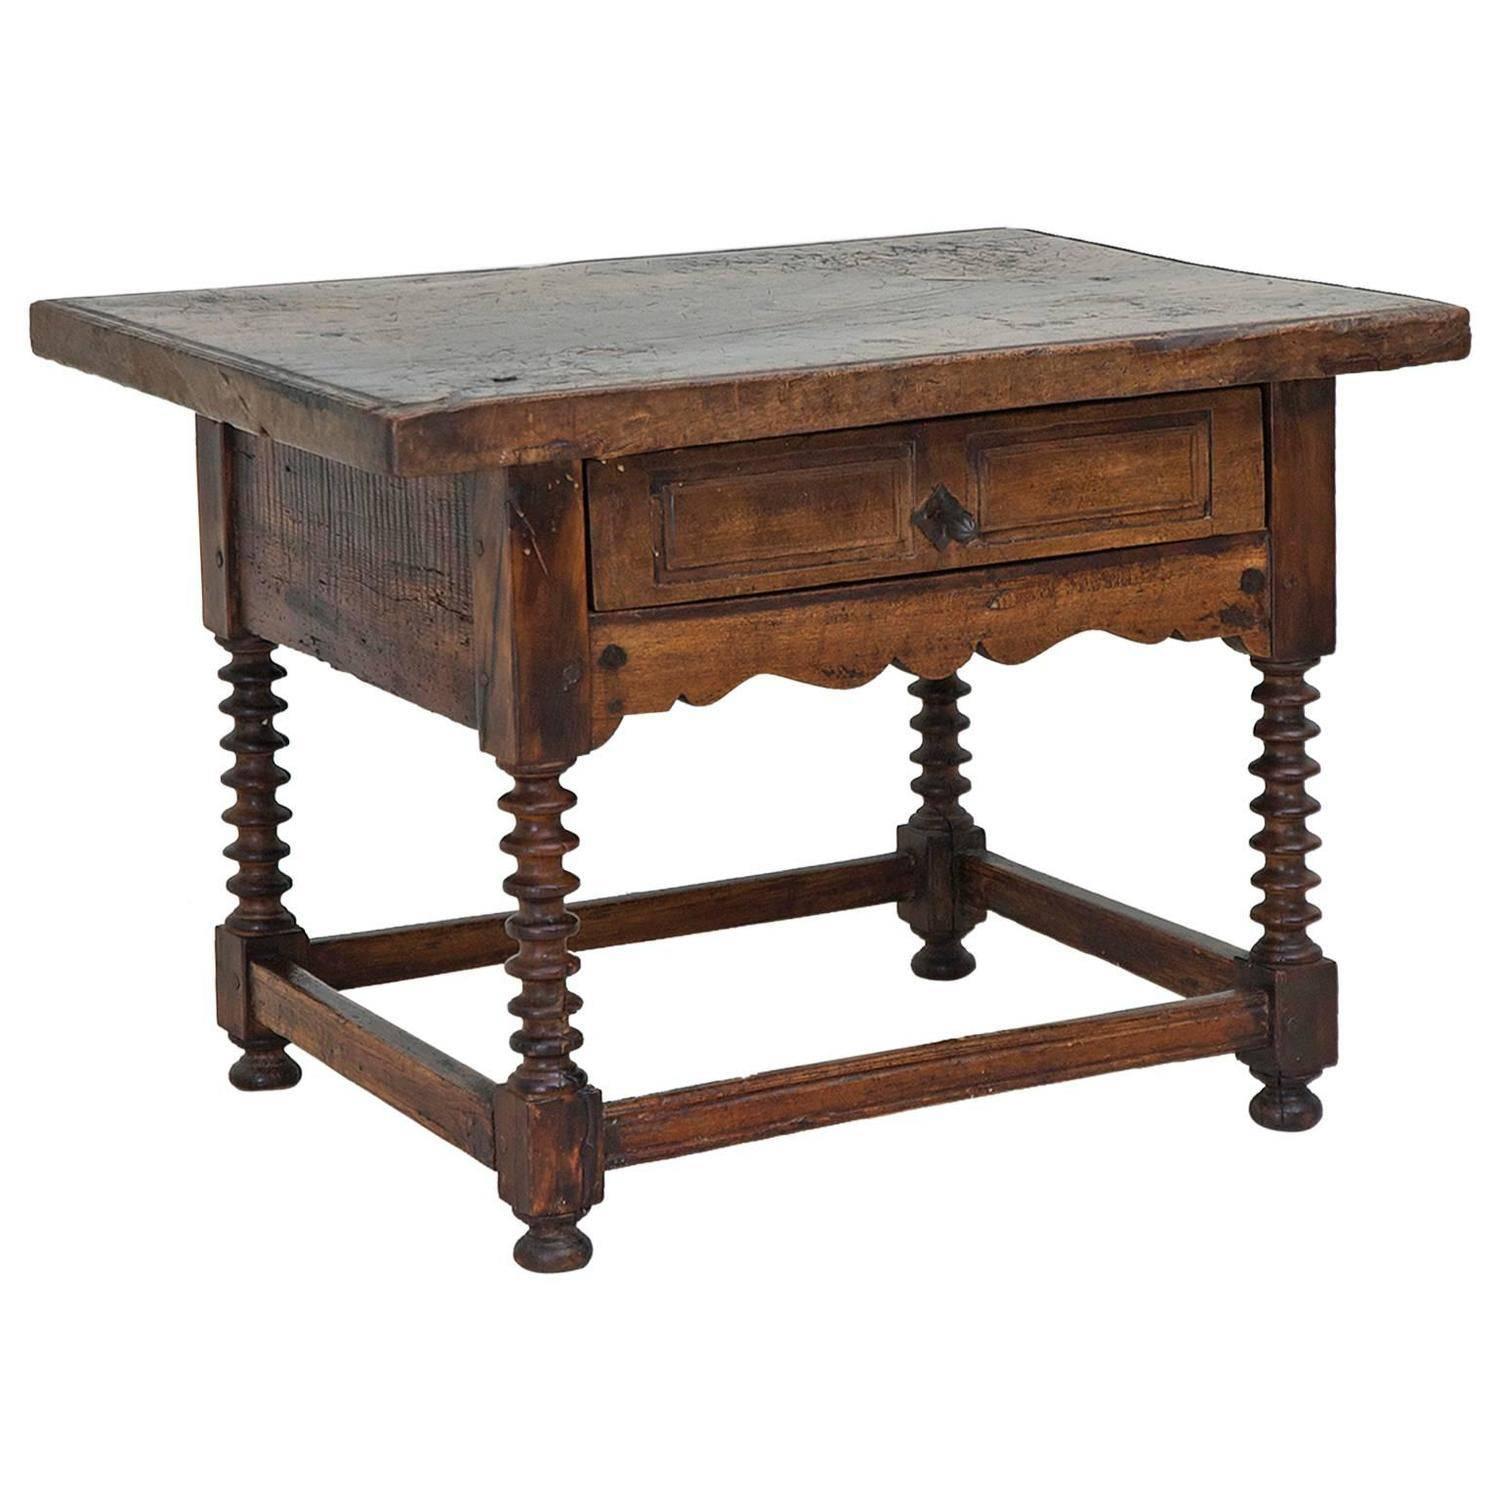 18th Century Rustic Spanish Shoemaker's Table in Walnut